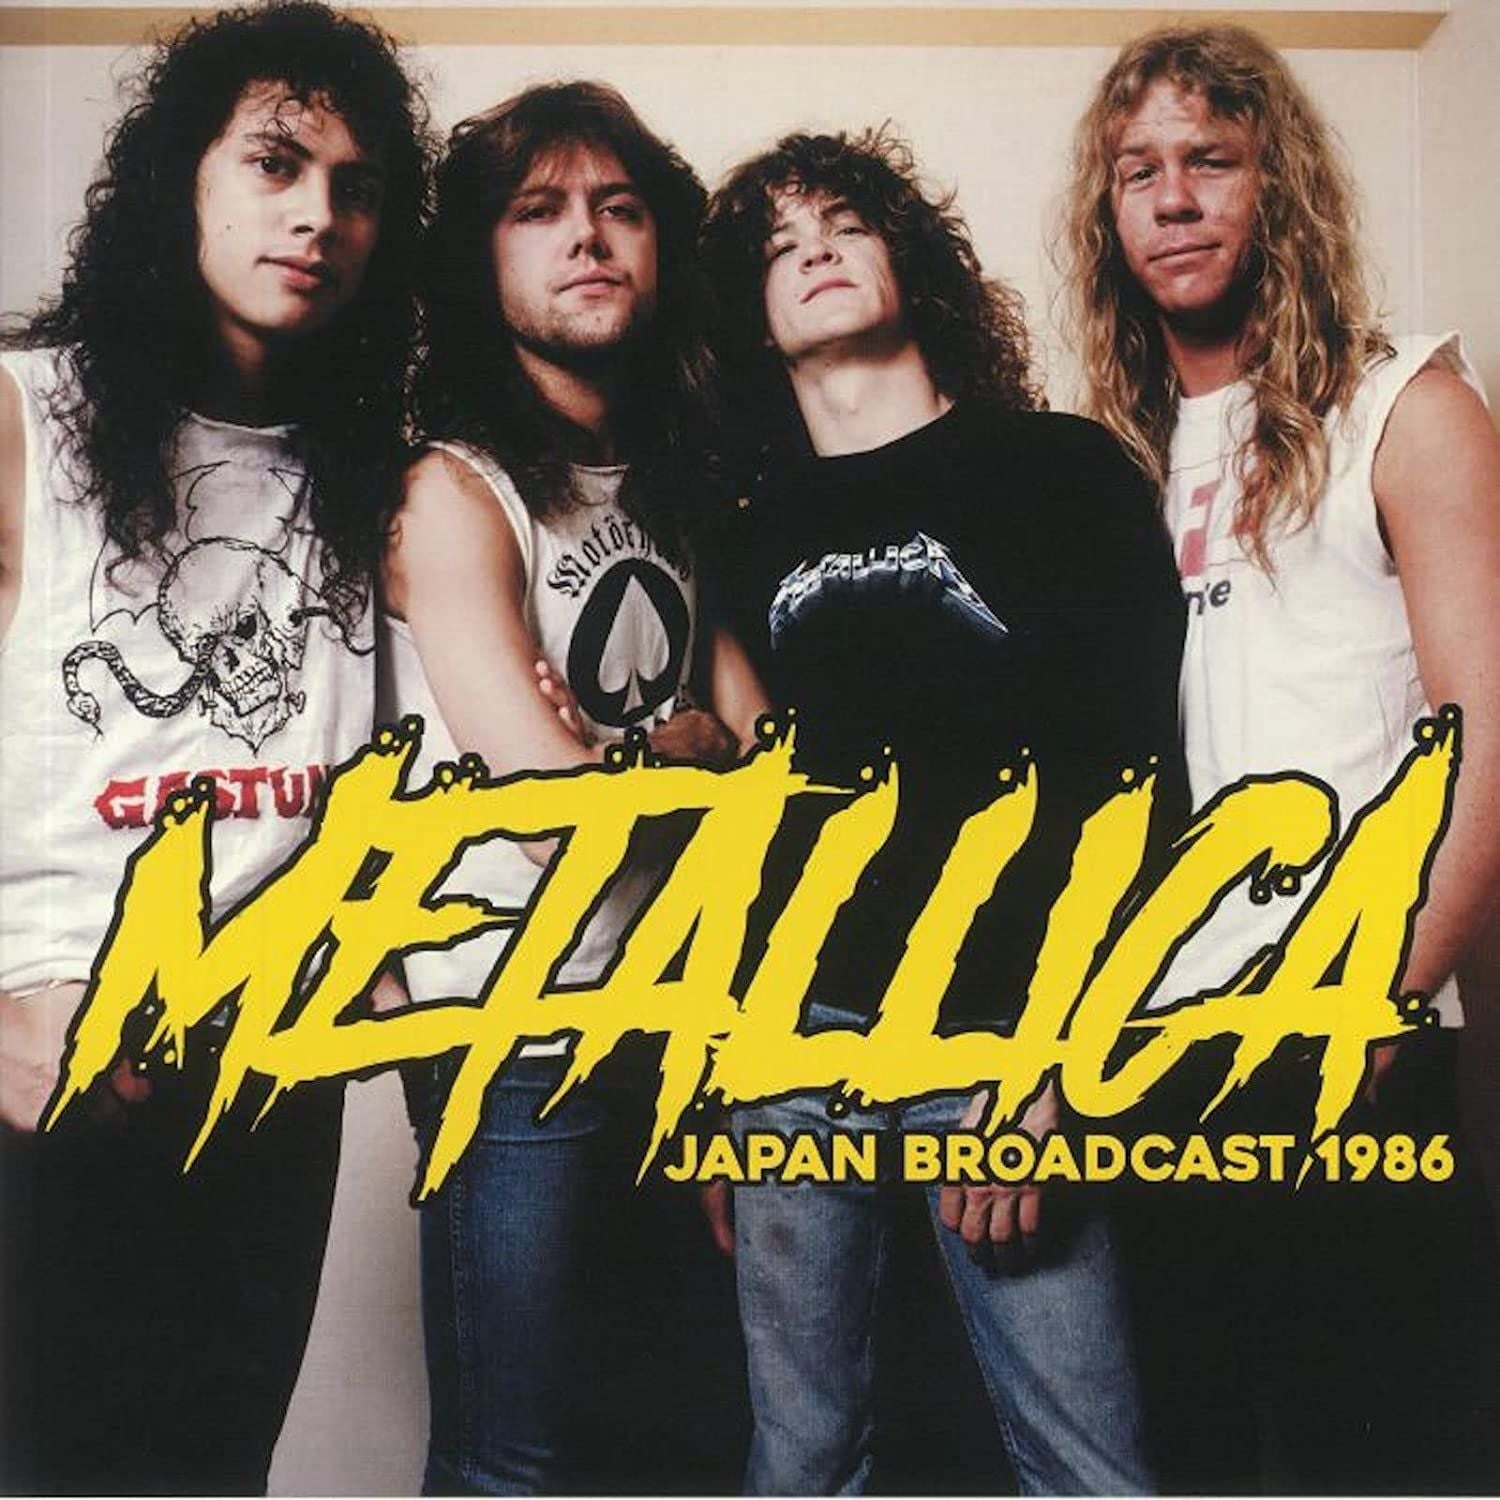 Metallica - Japan Broadcast 1986 (Ltd. Ed. 2LP - 500 copies) - Vinyl - New